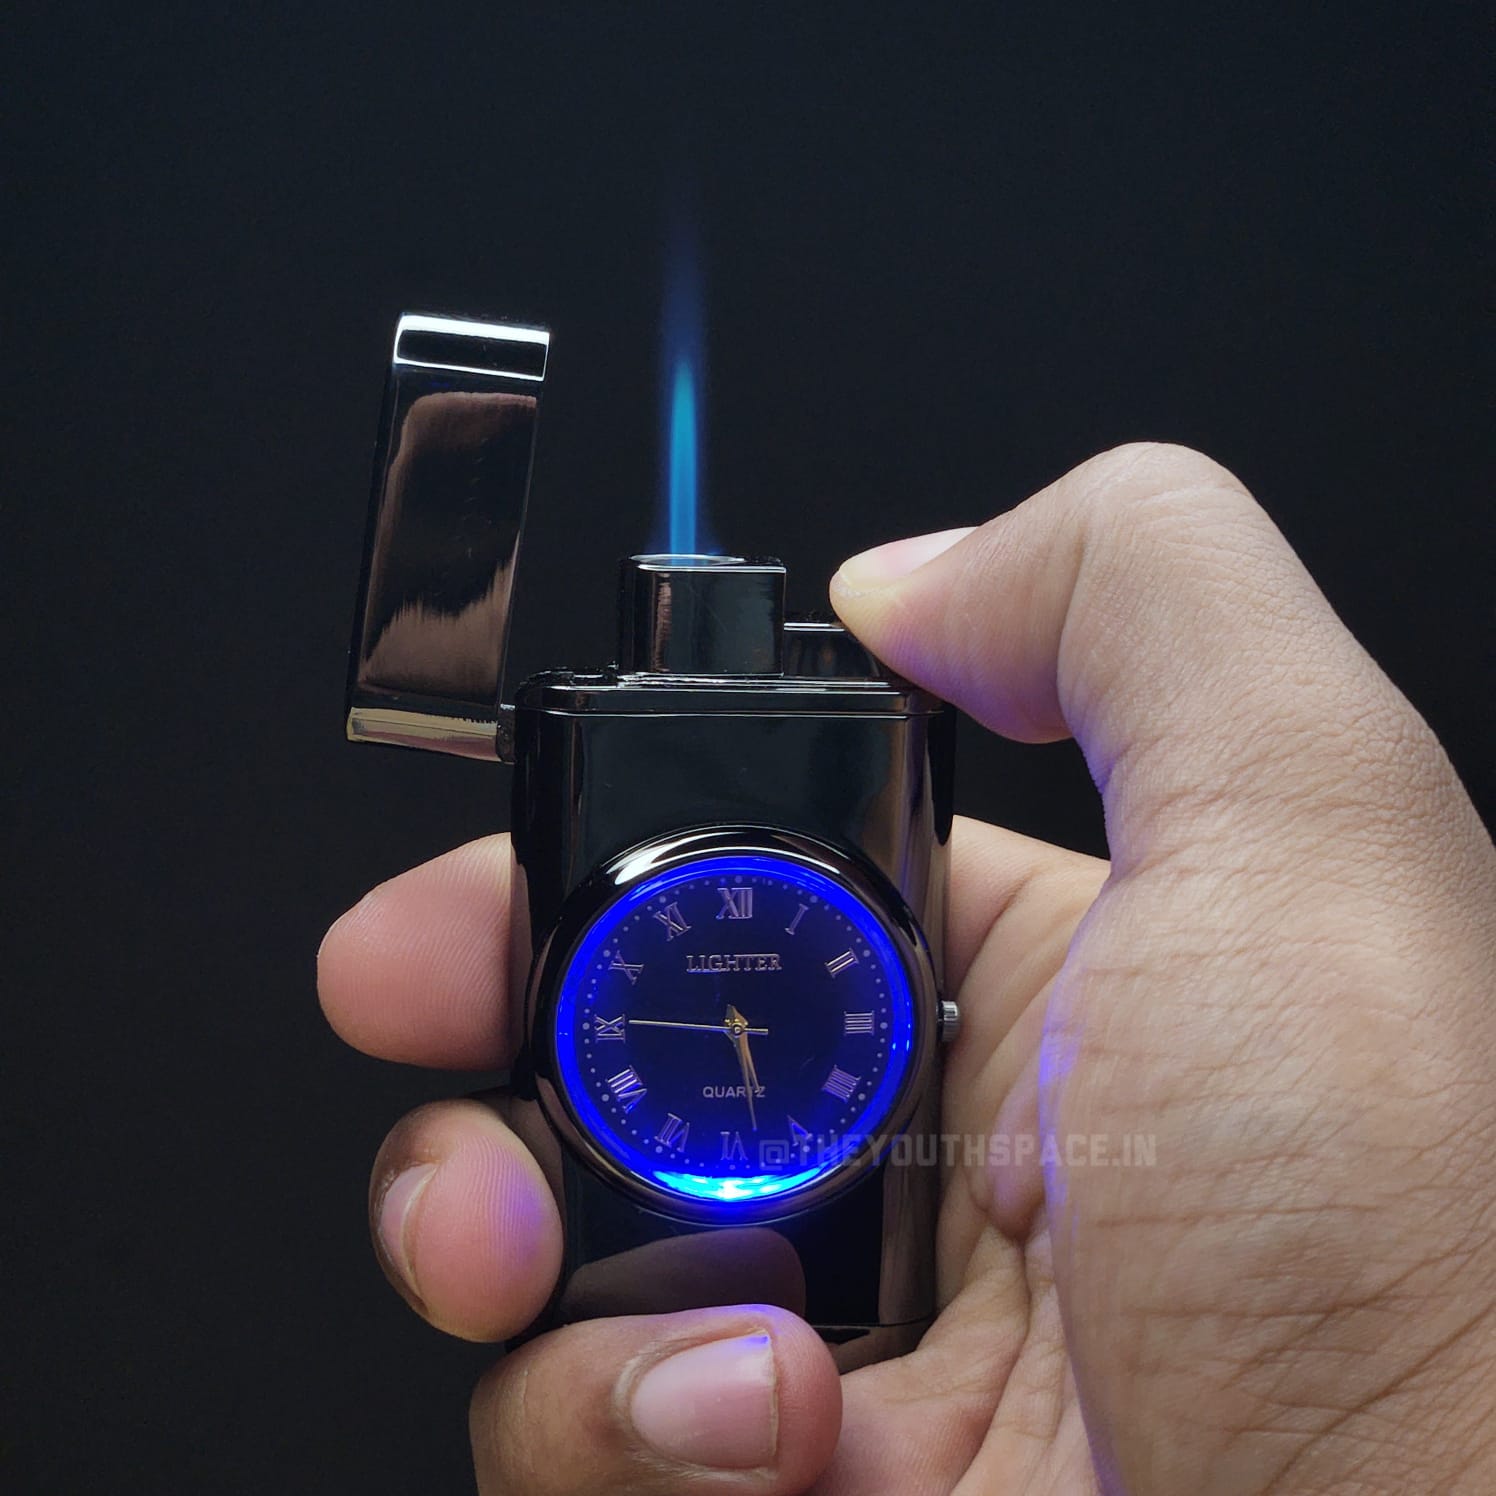 Glossy Black clock jet lighter